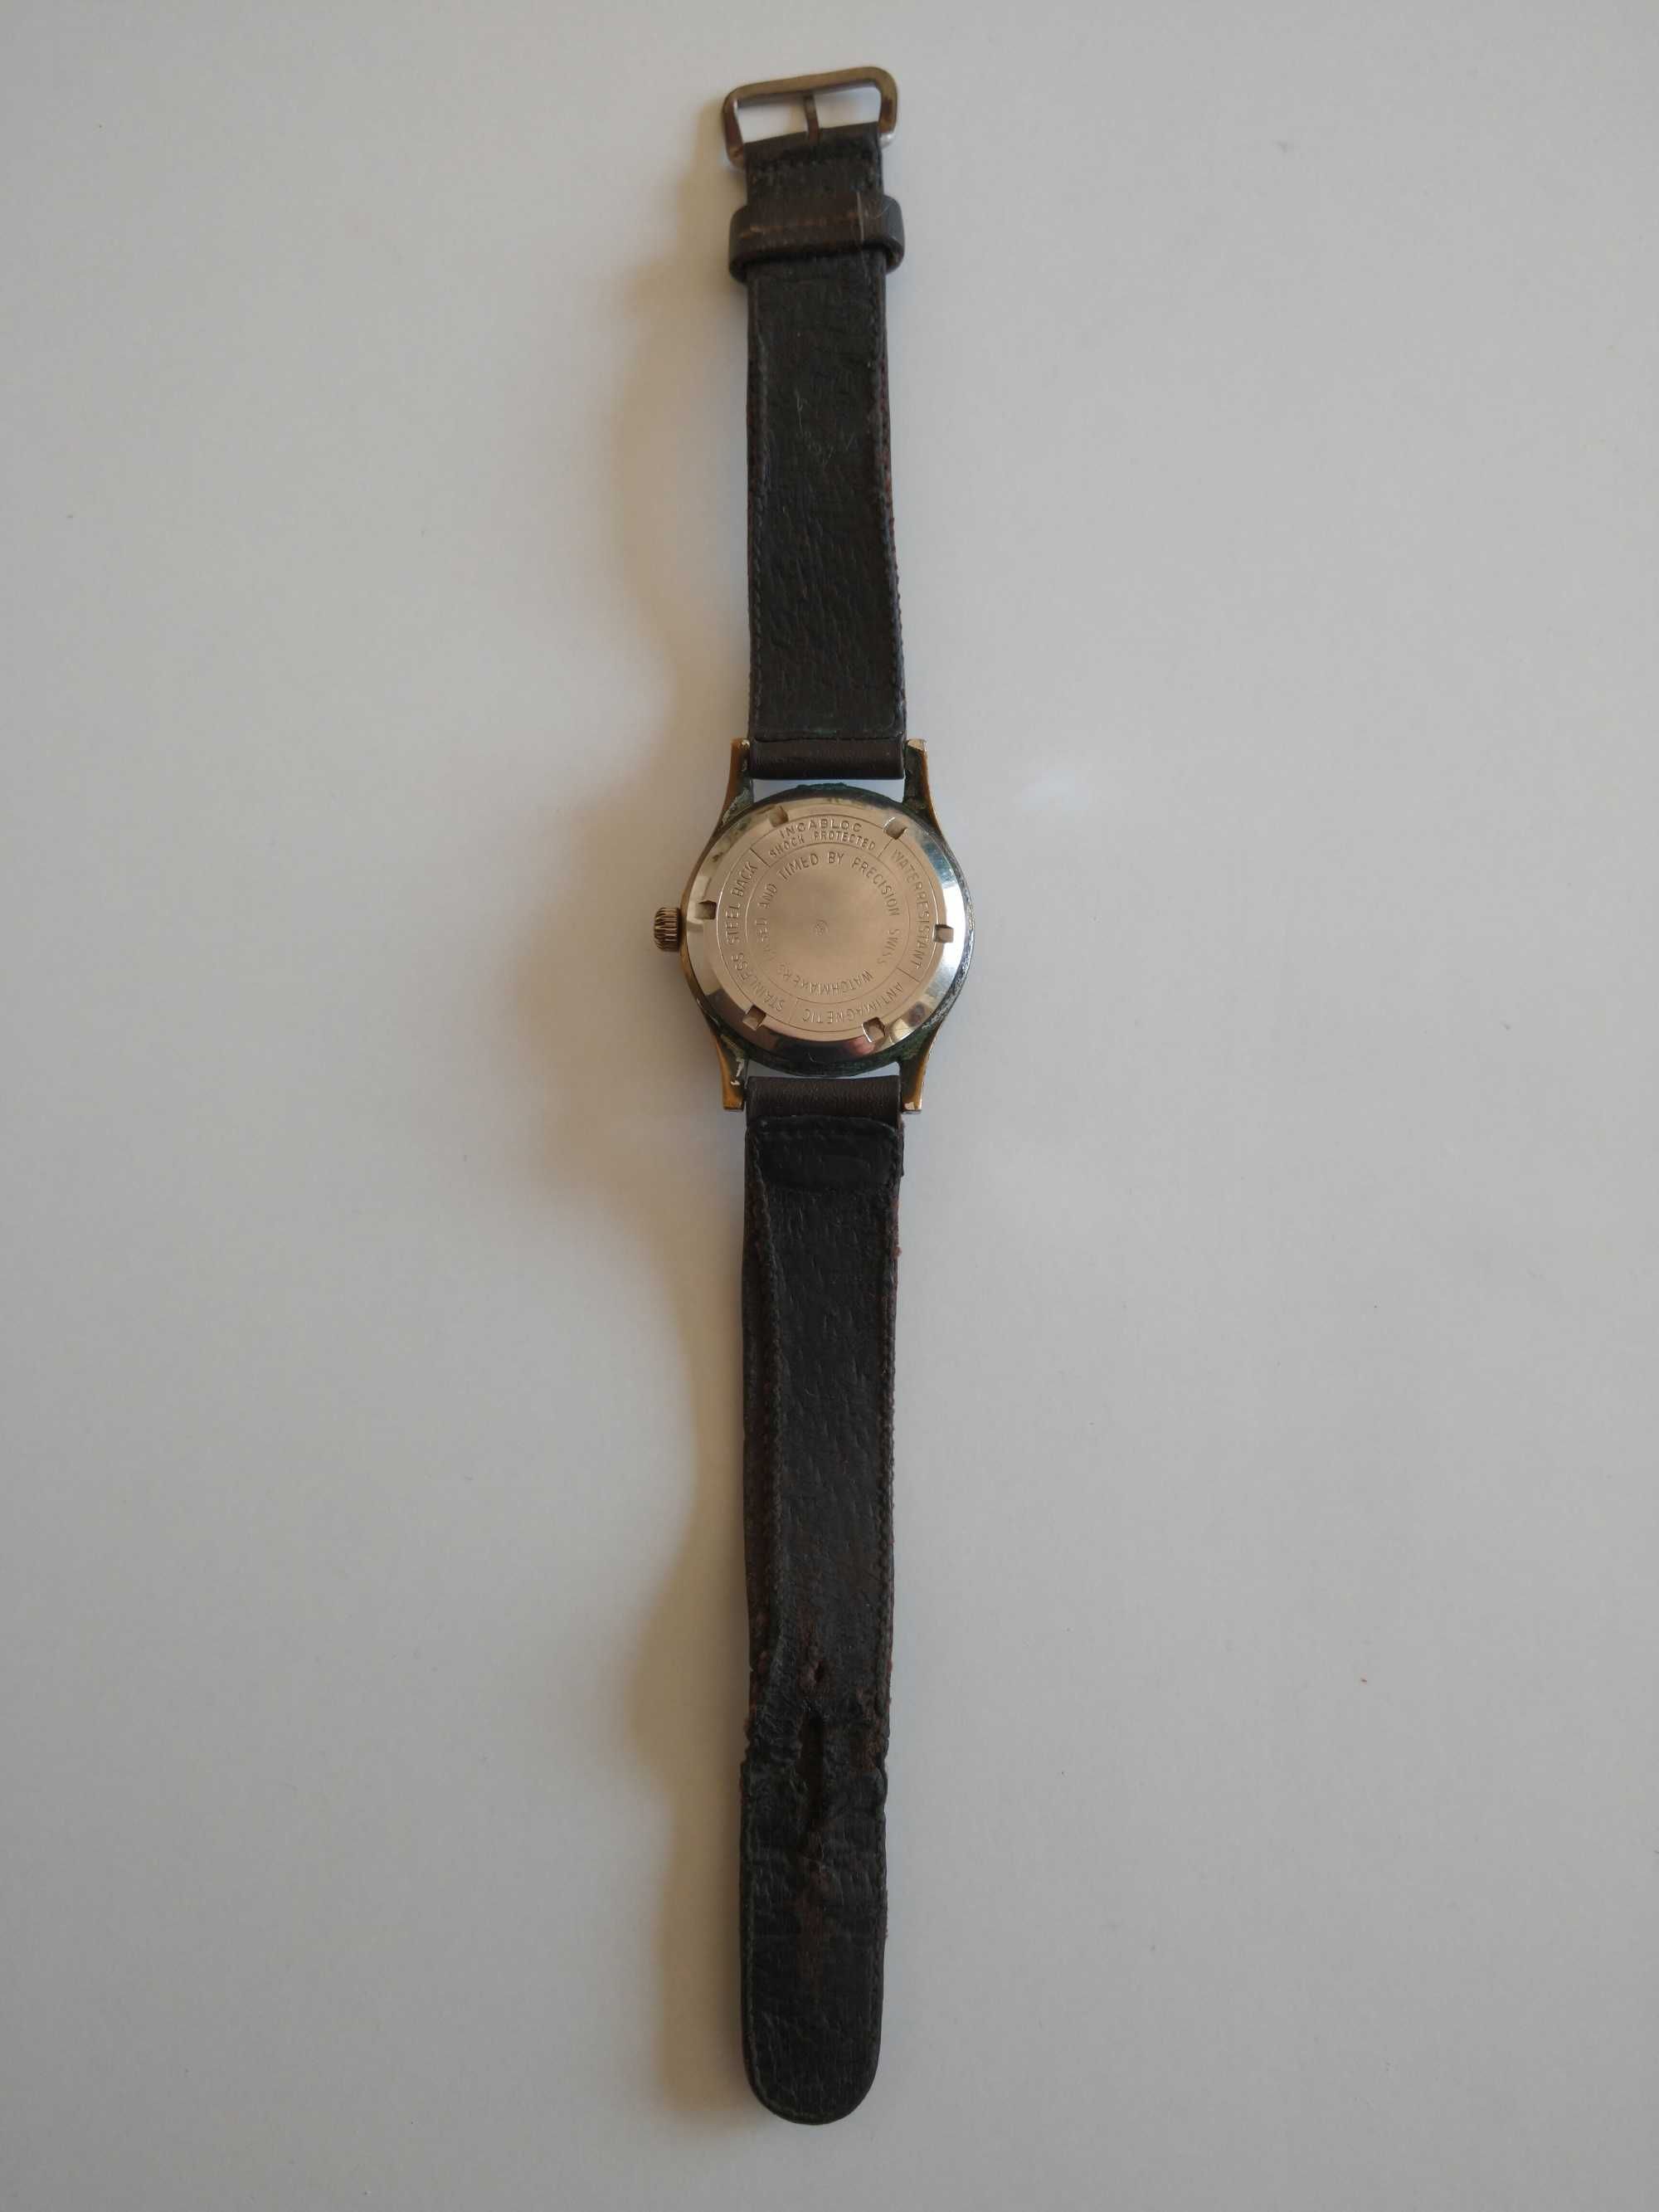 Clarin 17 JEWELS Swiss made механичен часовник – работещ